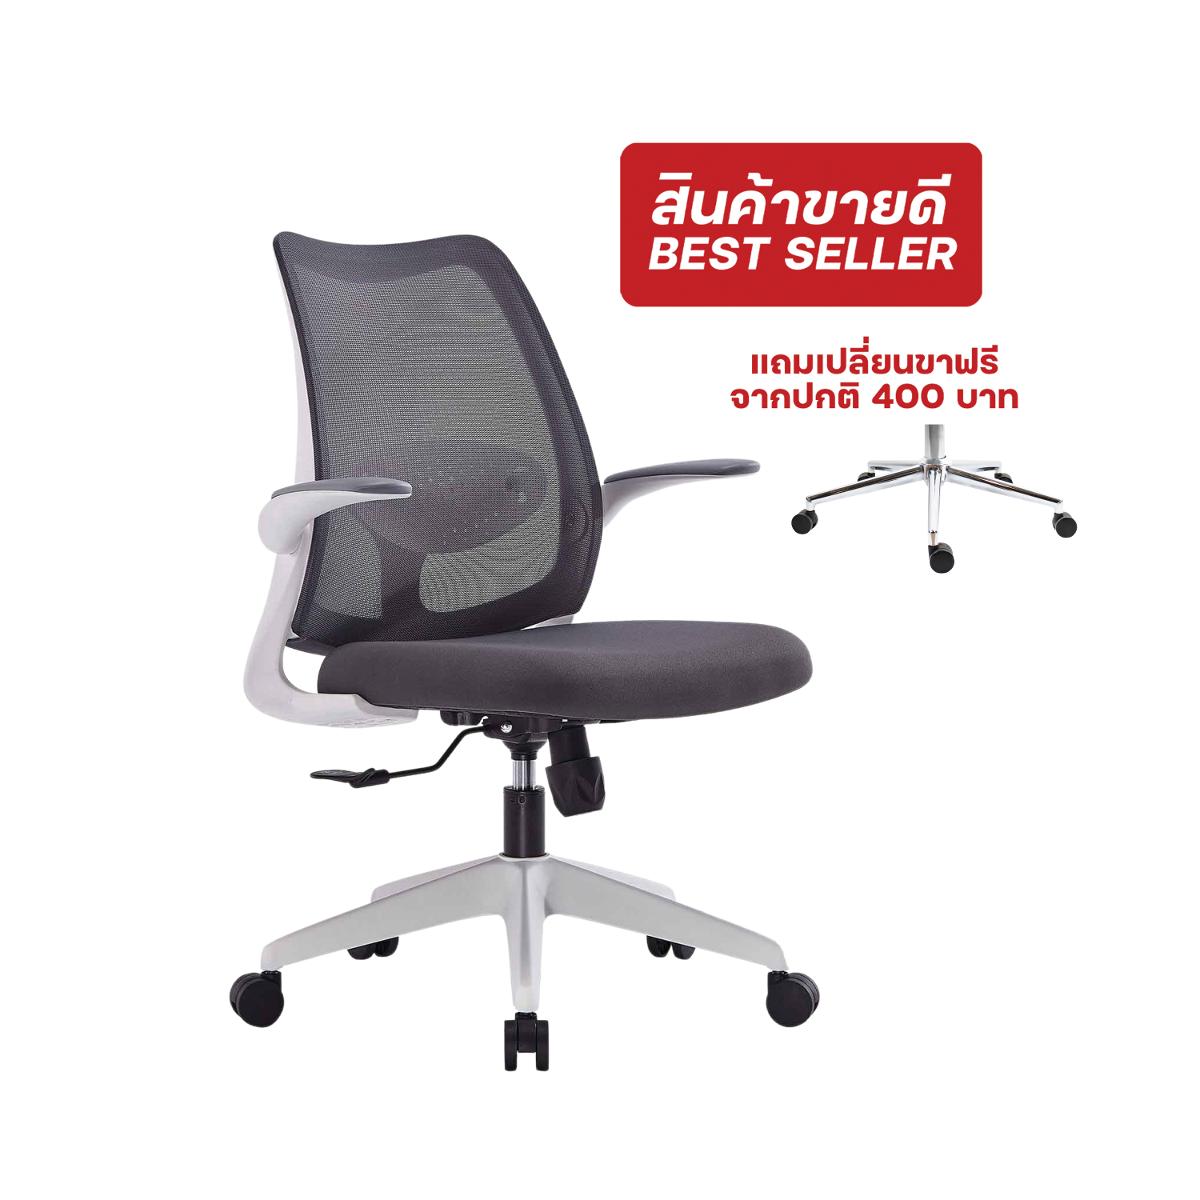 Super Chair เก้าอี้สำนักงาน รุ่น New Gen M WHITE